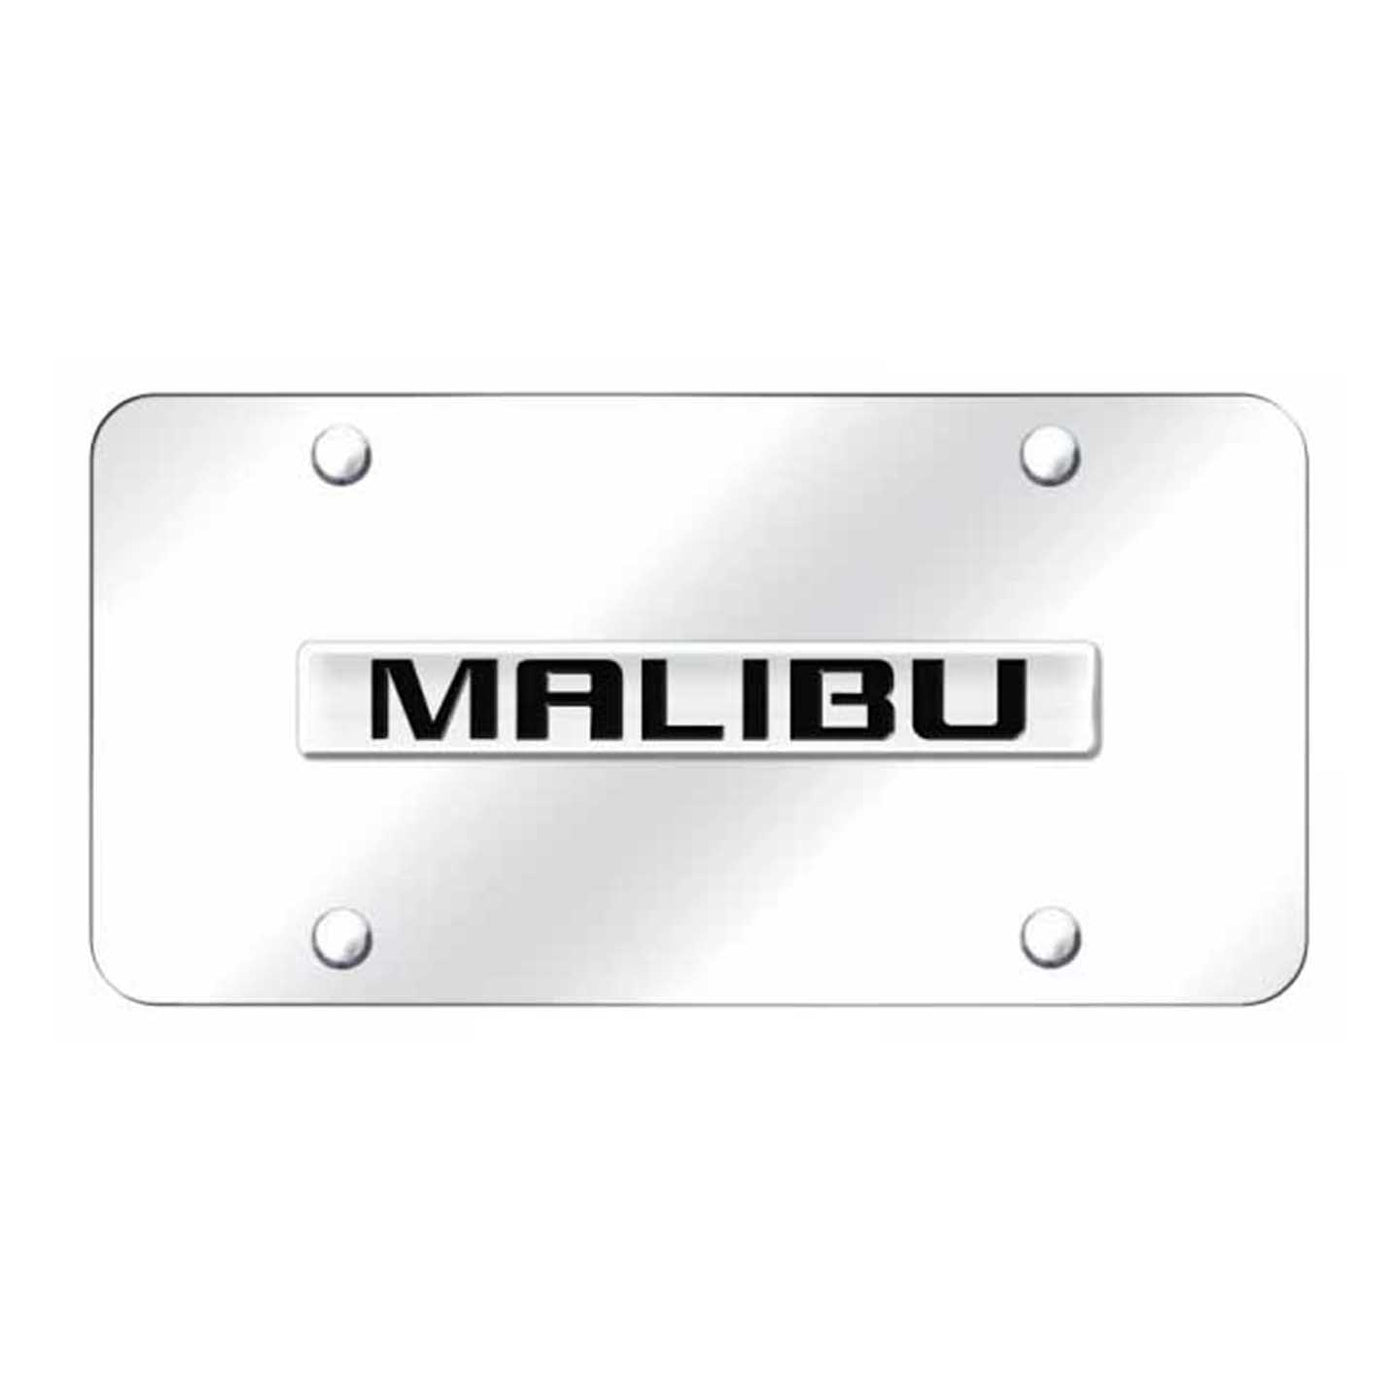 Malibu Name License Plate - Chrome on Mirrored